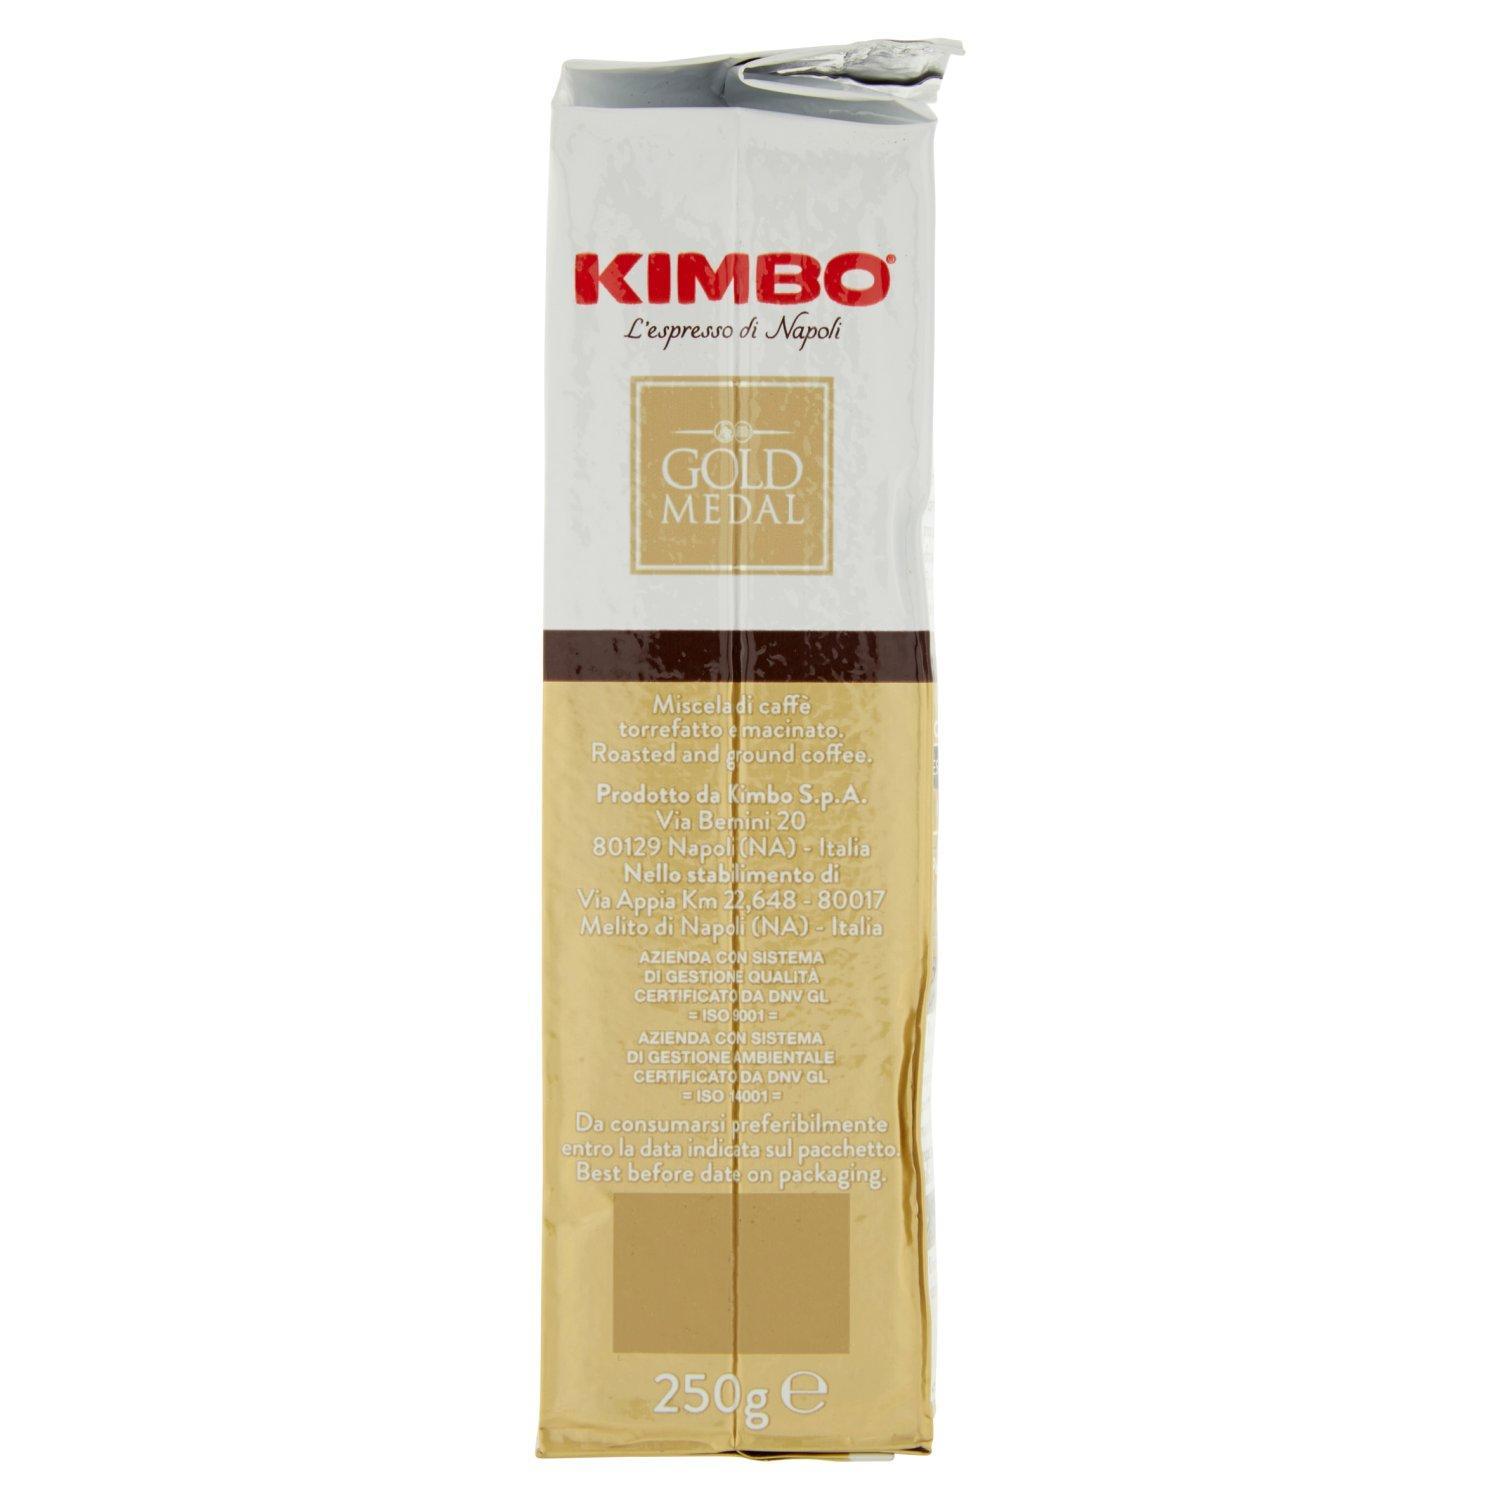 caffe-macinato-gold-medal-busta-kimbo-250gr-2